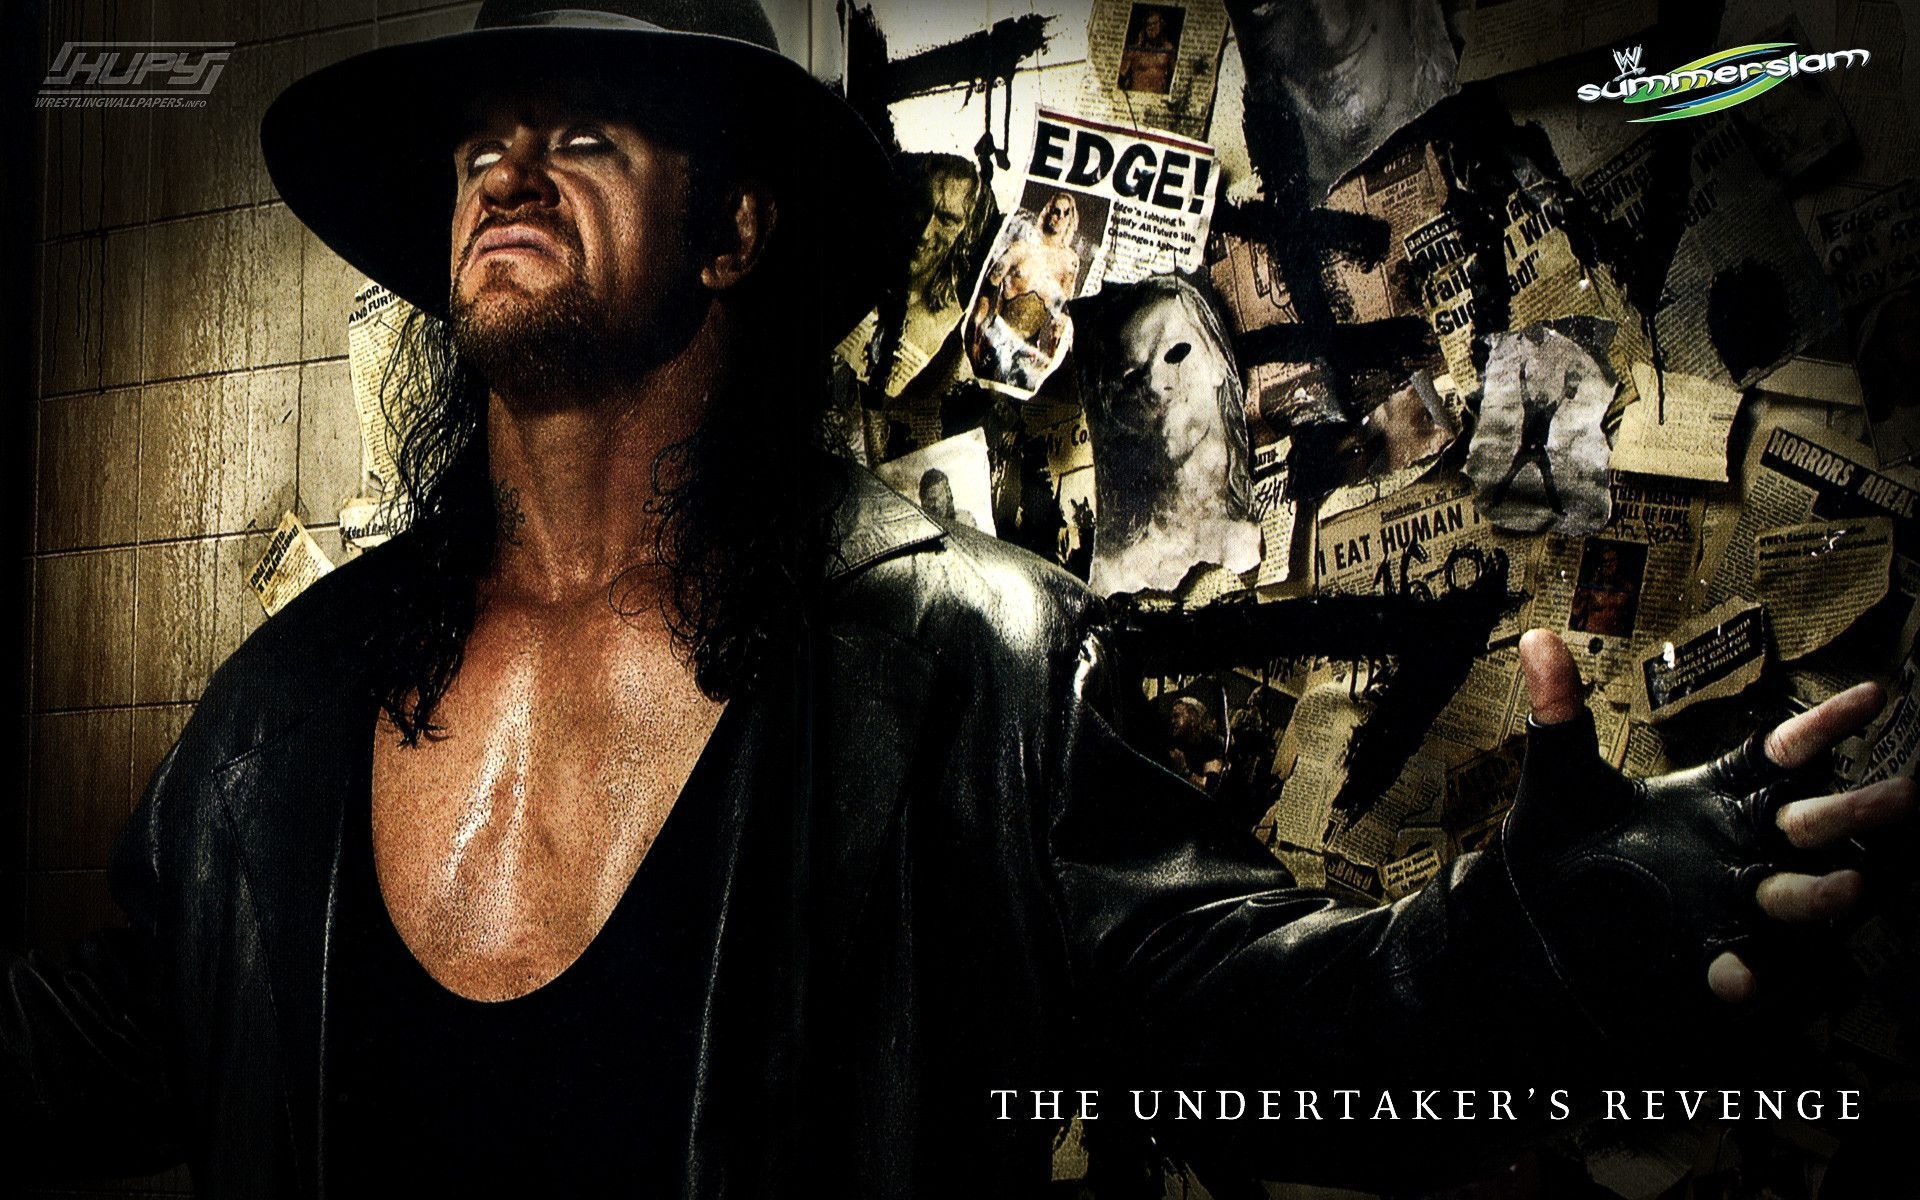 Undertaker dead image. 18 Best Undertaker image in